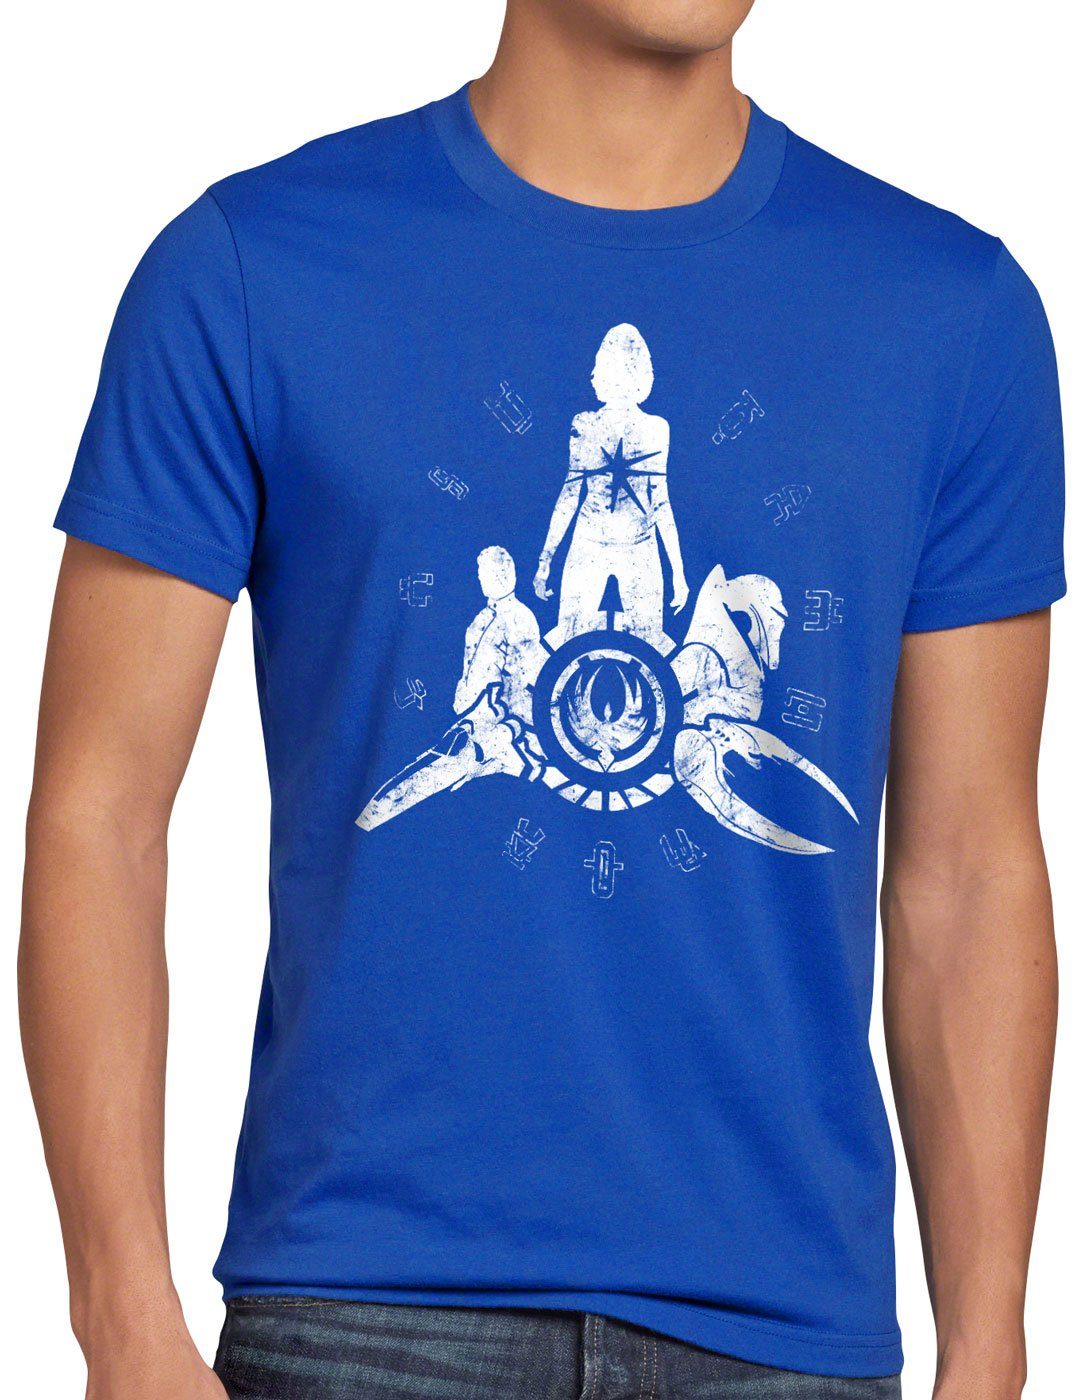 style3 Print-Shirt Herren T-Shirt Battle Stars galactica space blau